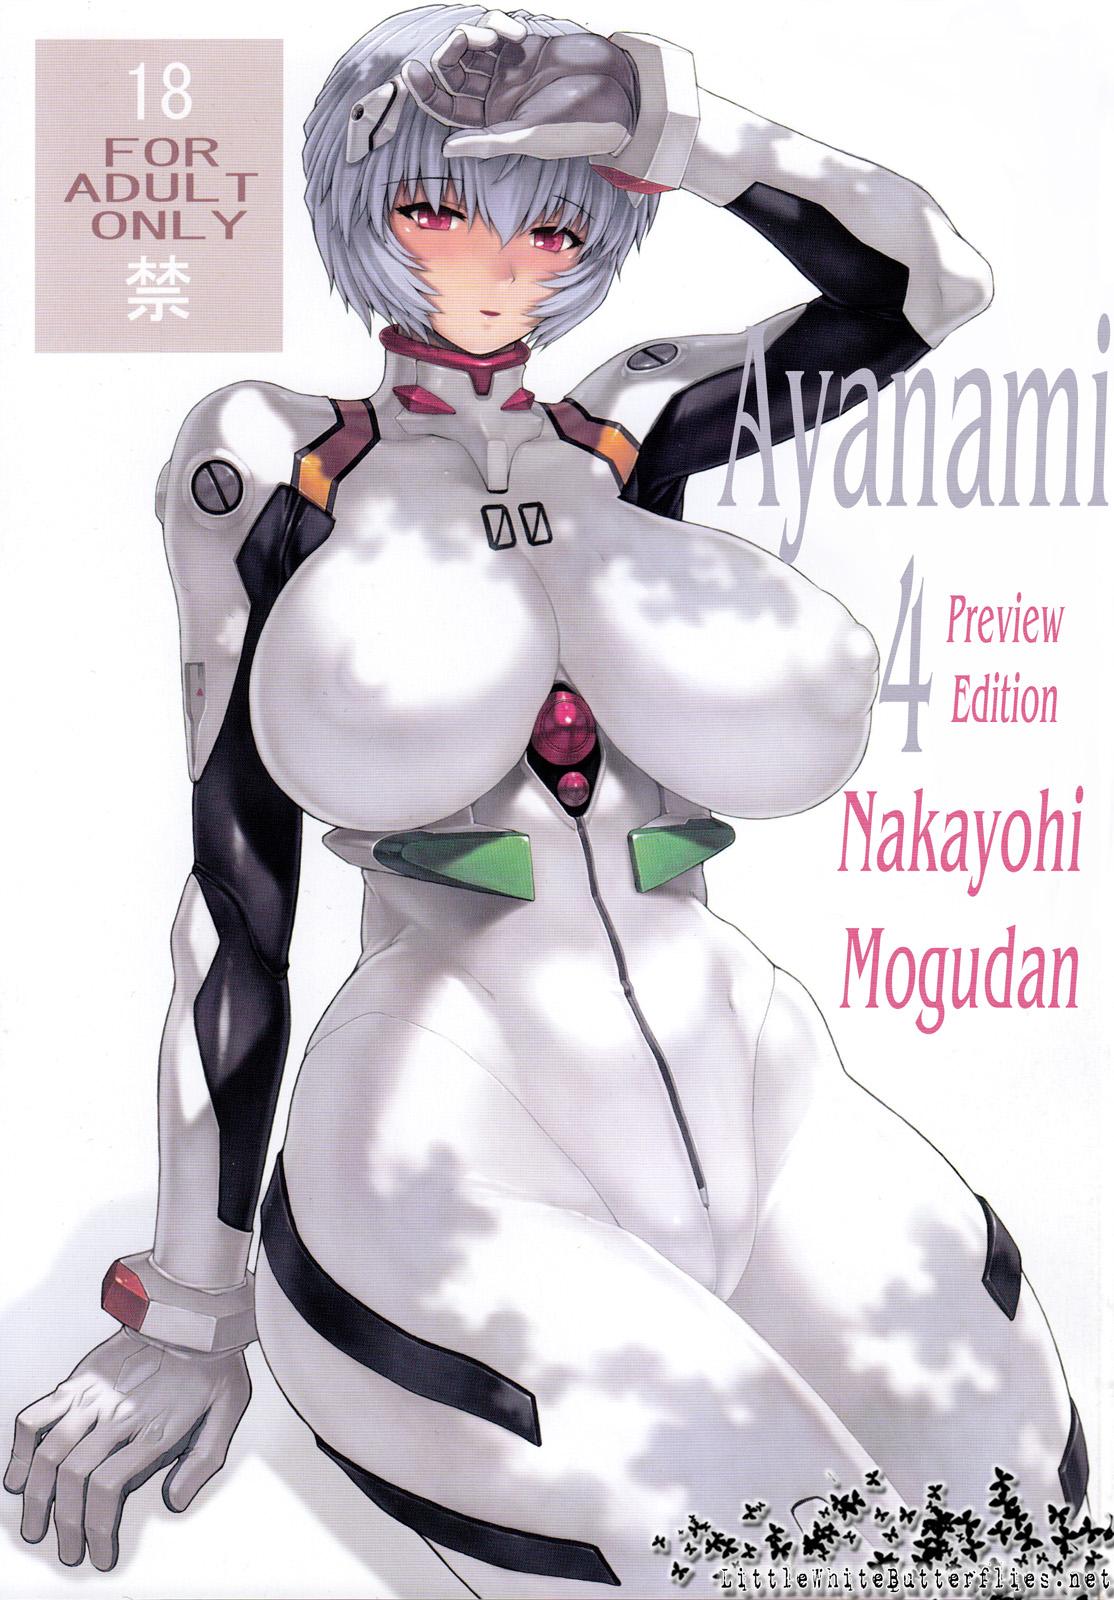 Ayanami Dai 4 Kai Pure Han | Ayanami 4 Preview Edition 0